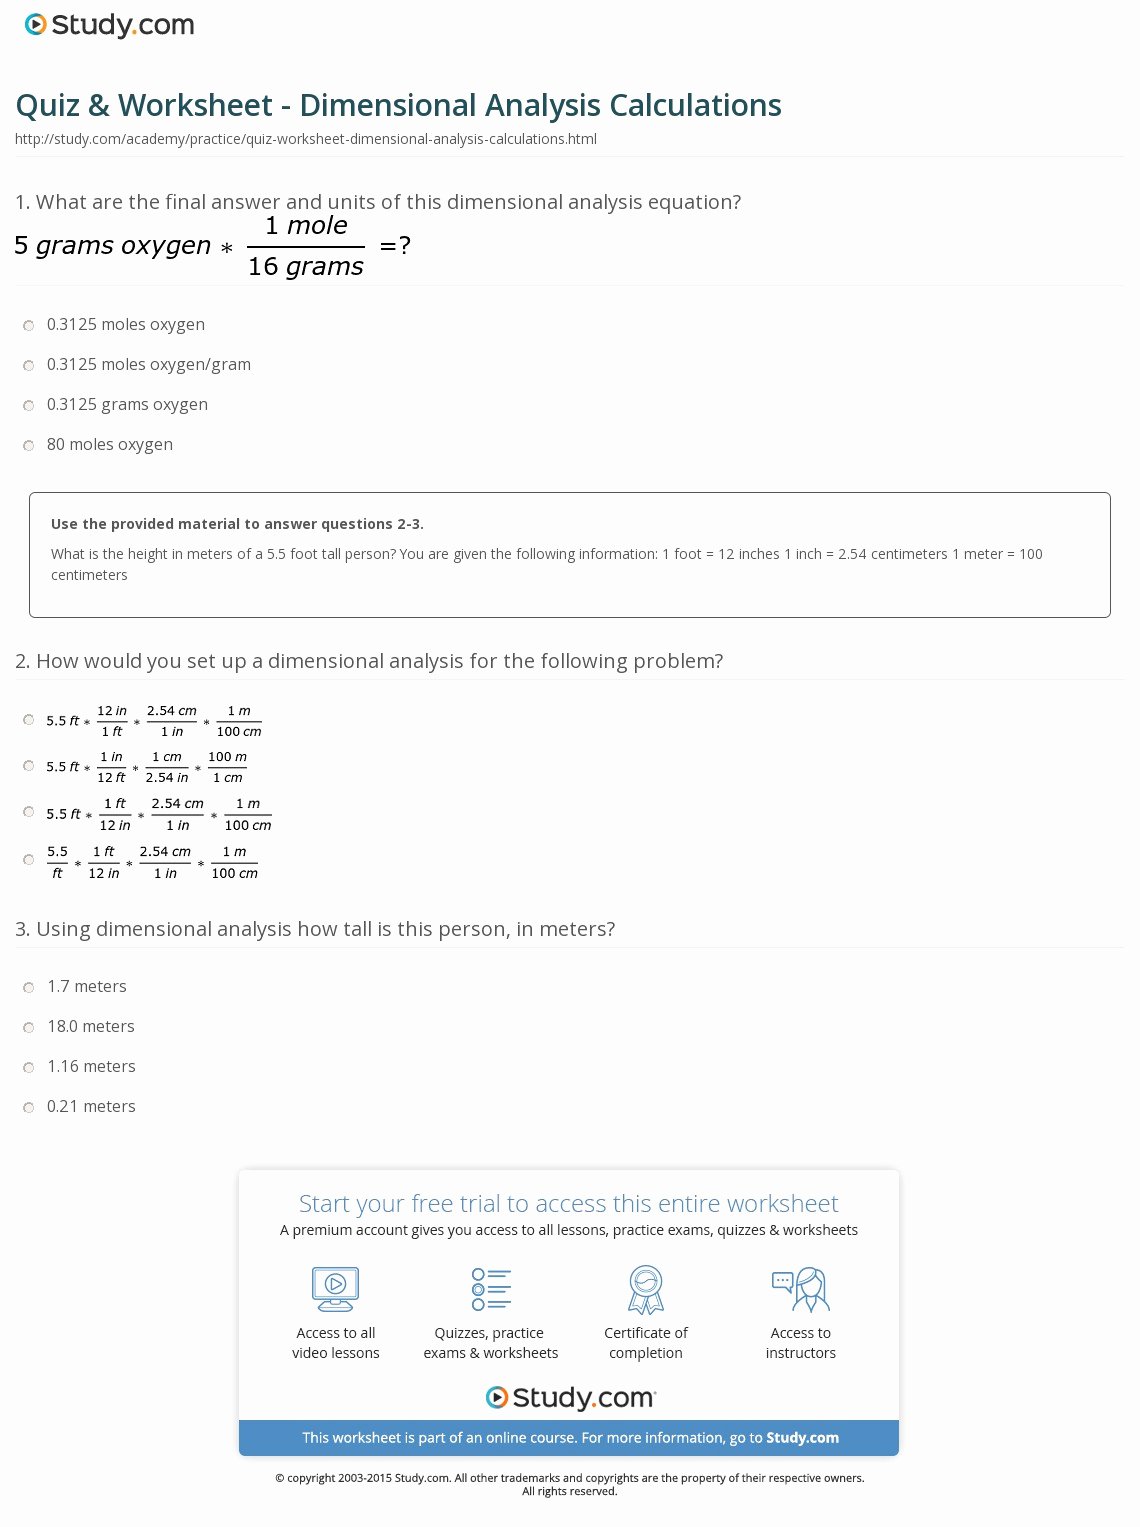 Dimensional Analysis Worksheet 2 Inspirational Quiz &amp; Worksheet Dimensional Analysis Calculations